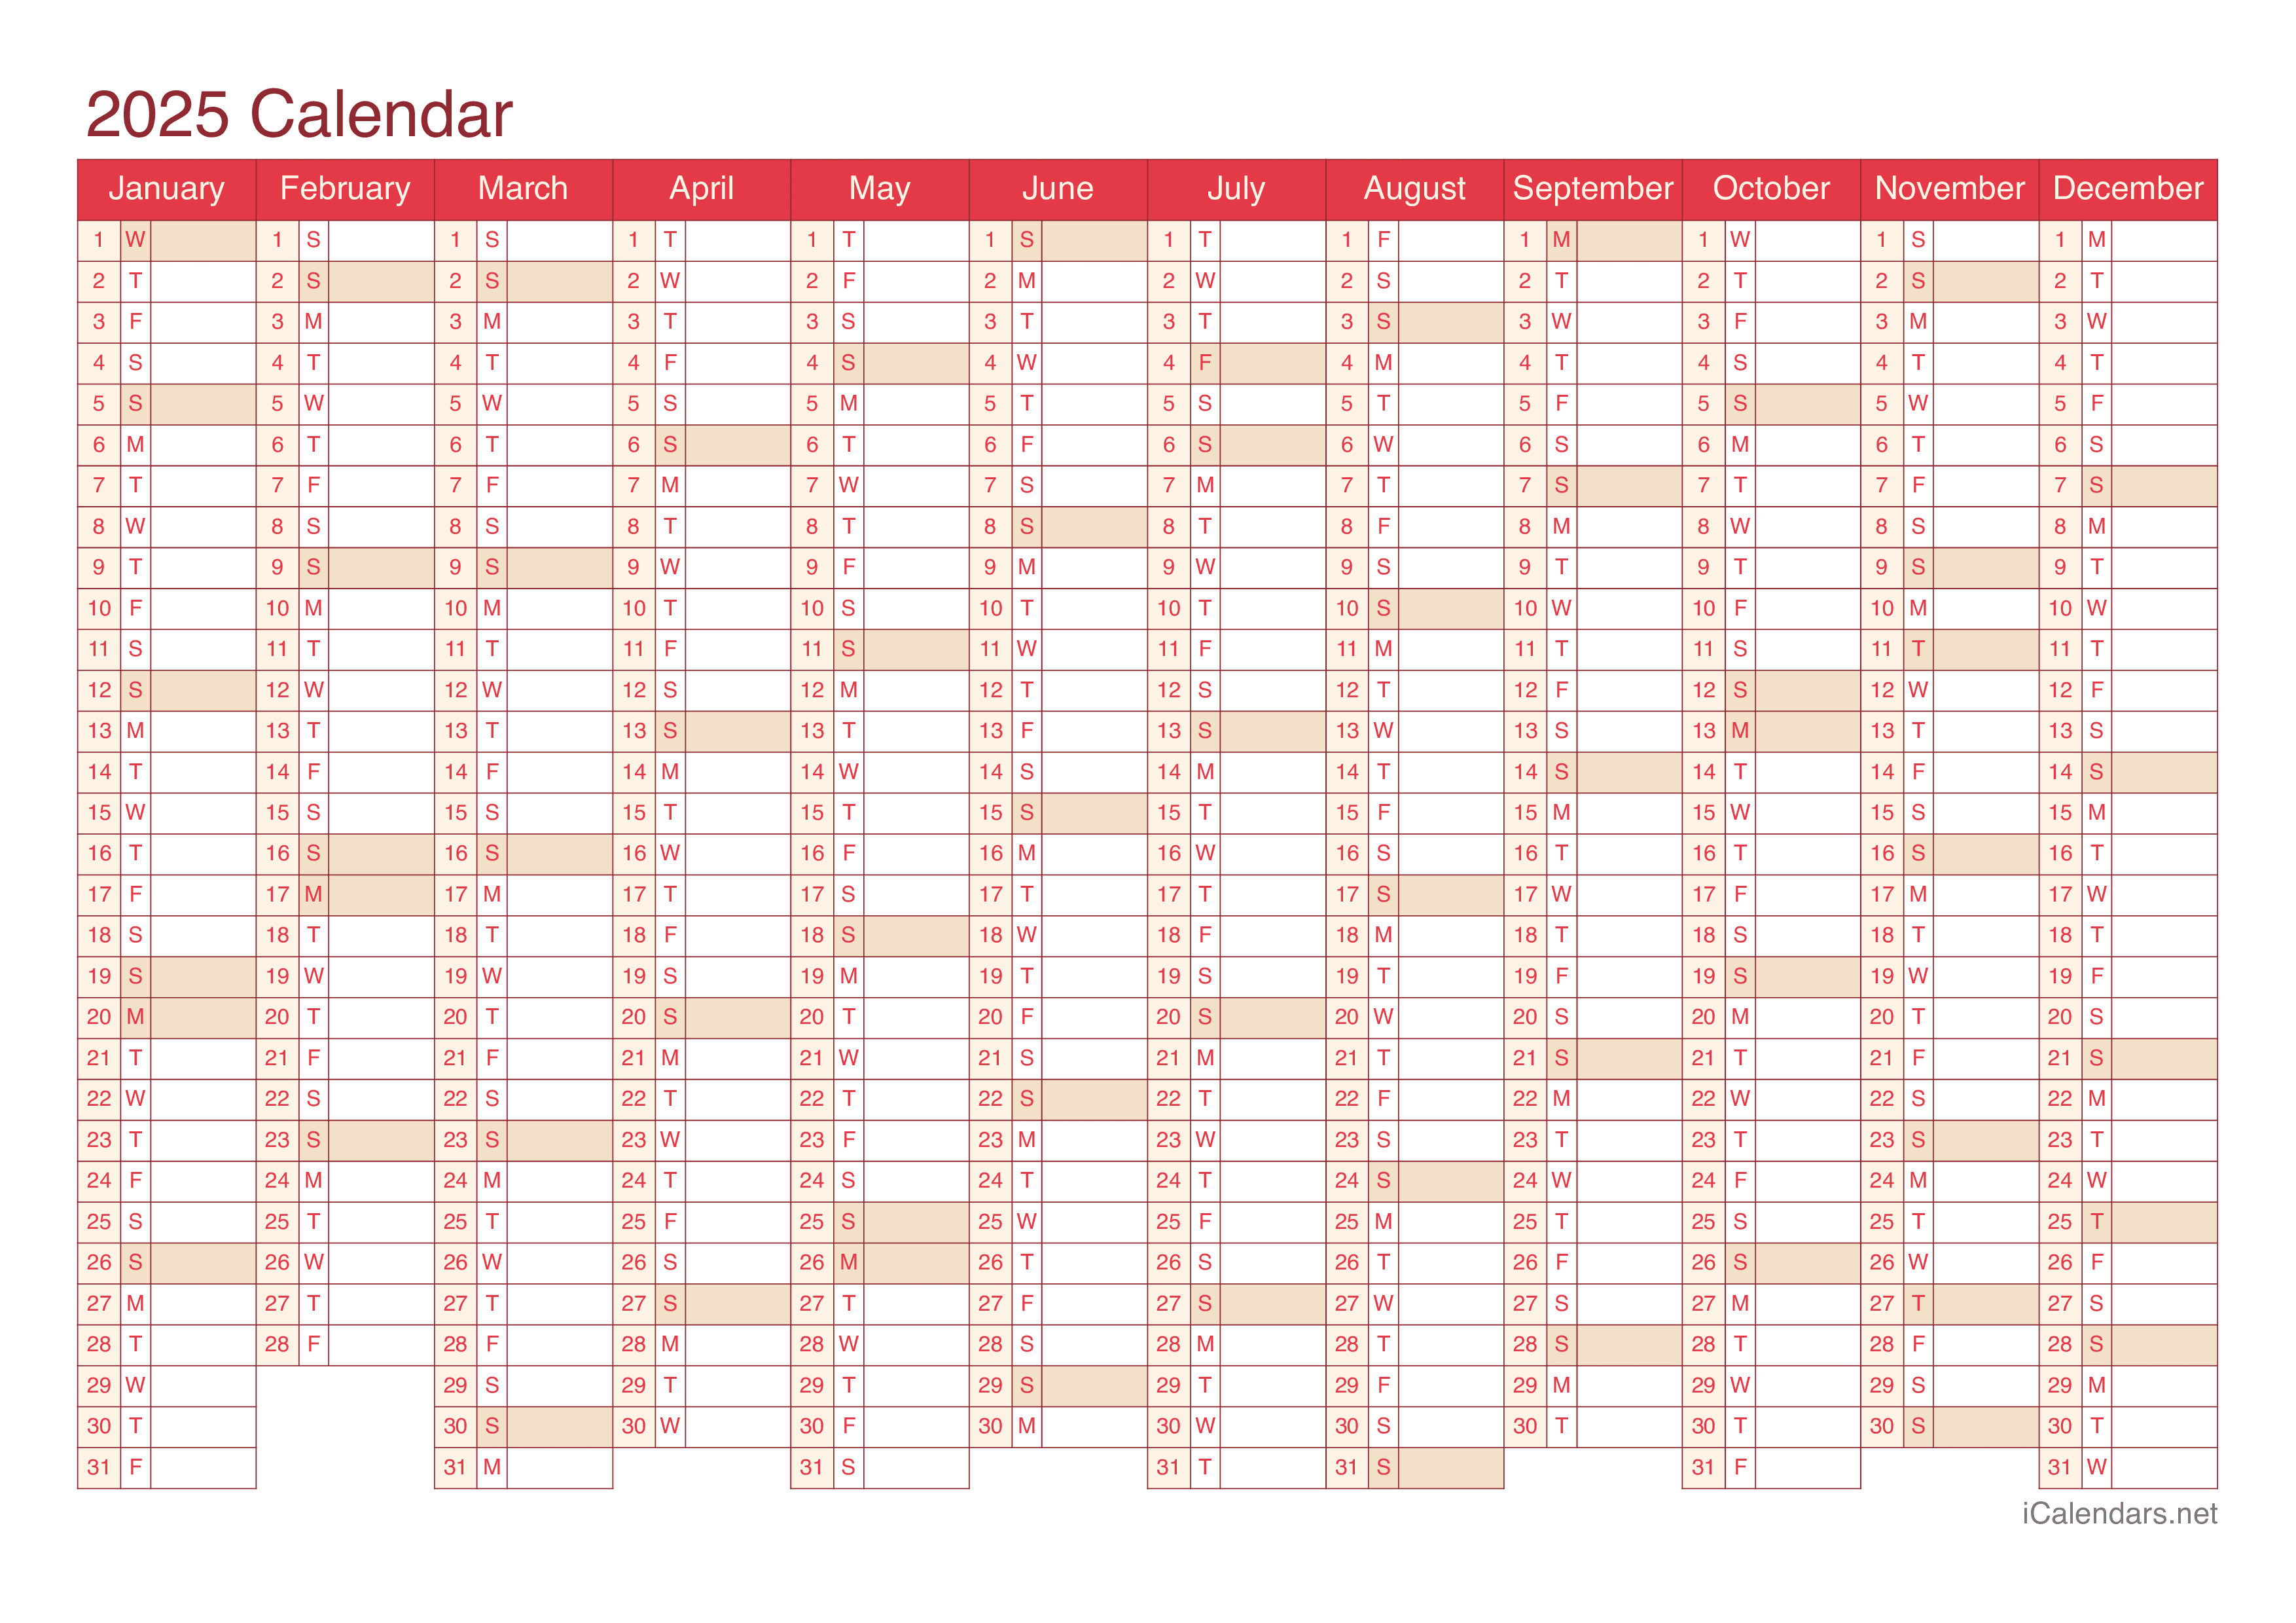 2025 Calendar - Cherry